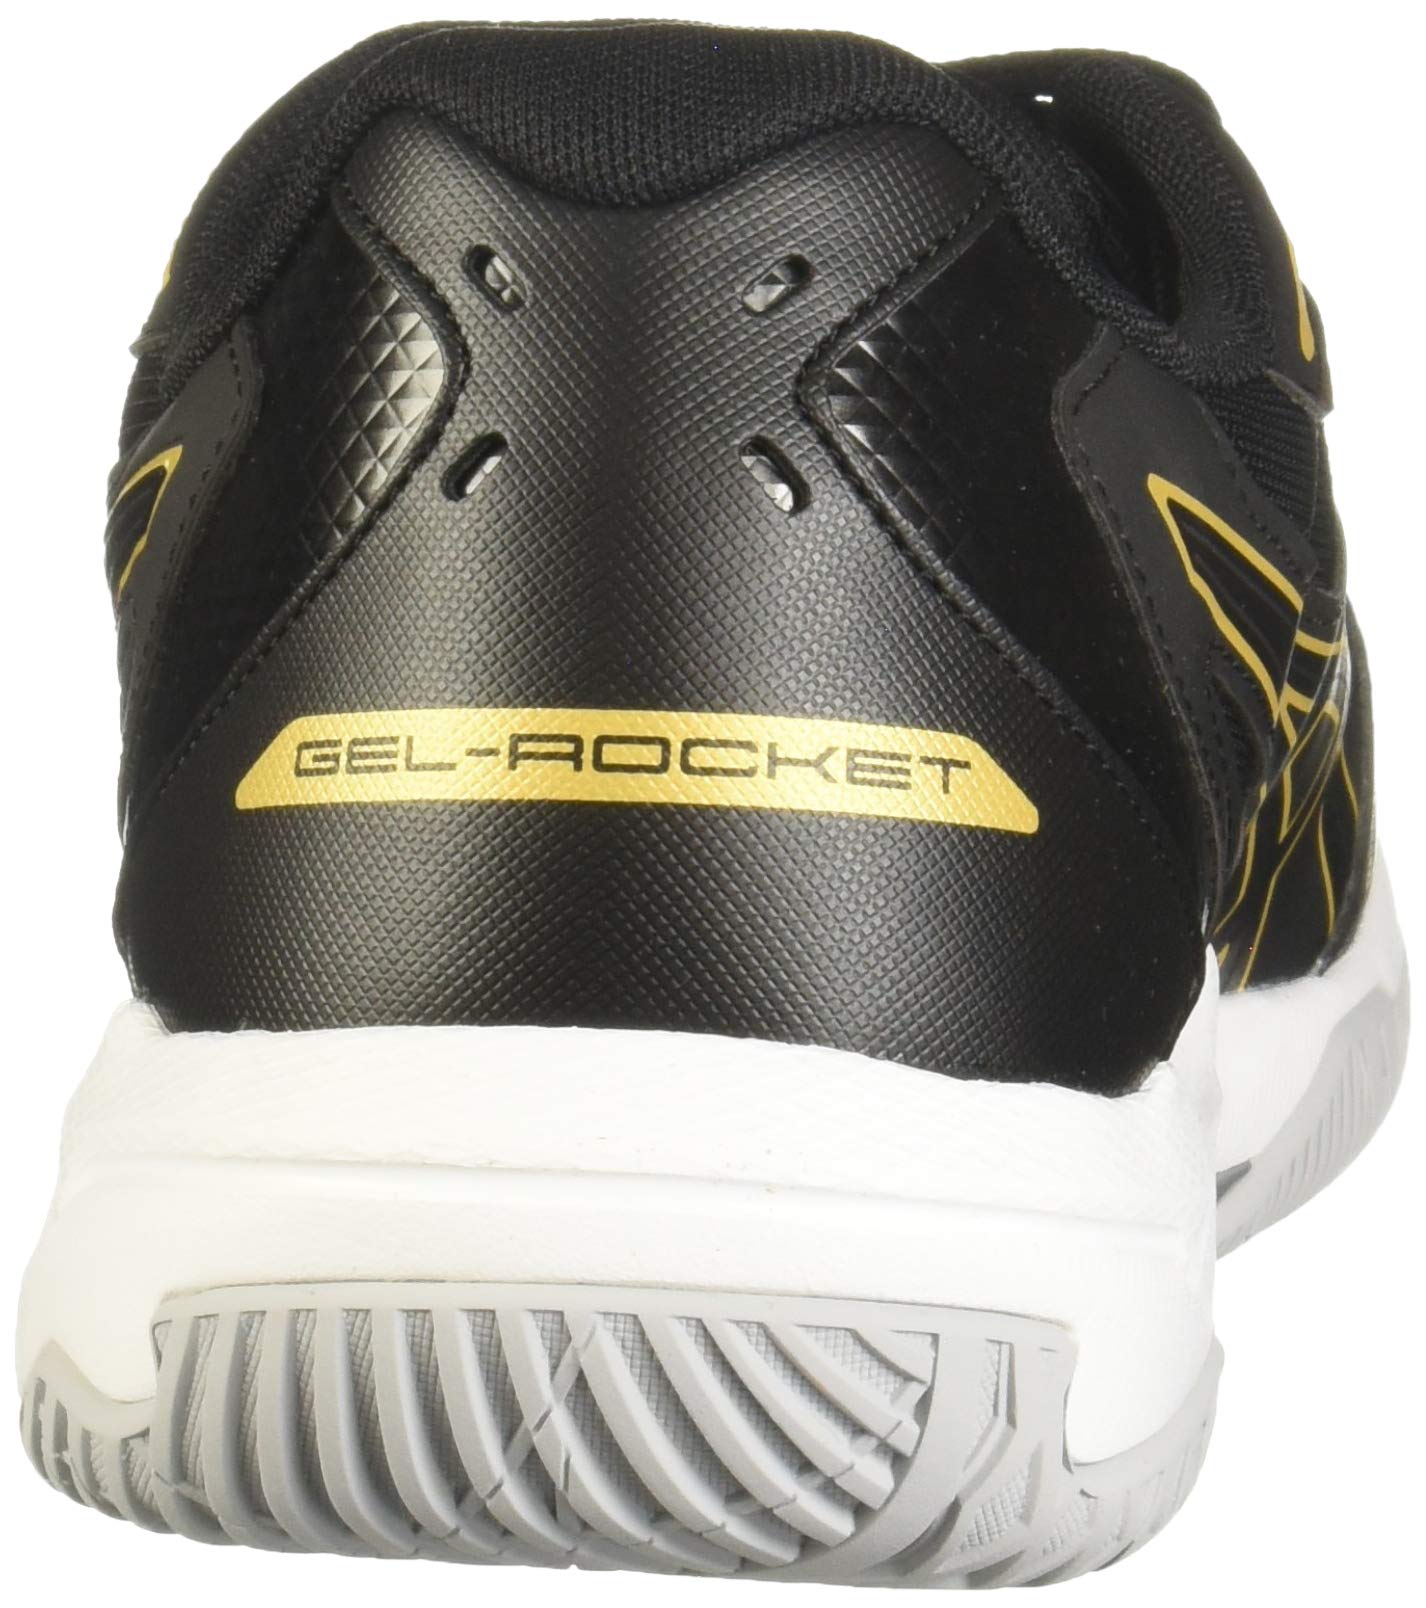 ASICS Men's Gel-Rocket 10 Volleyball Shoes